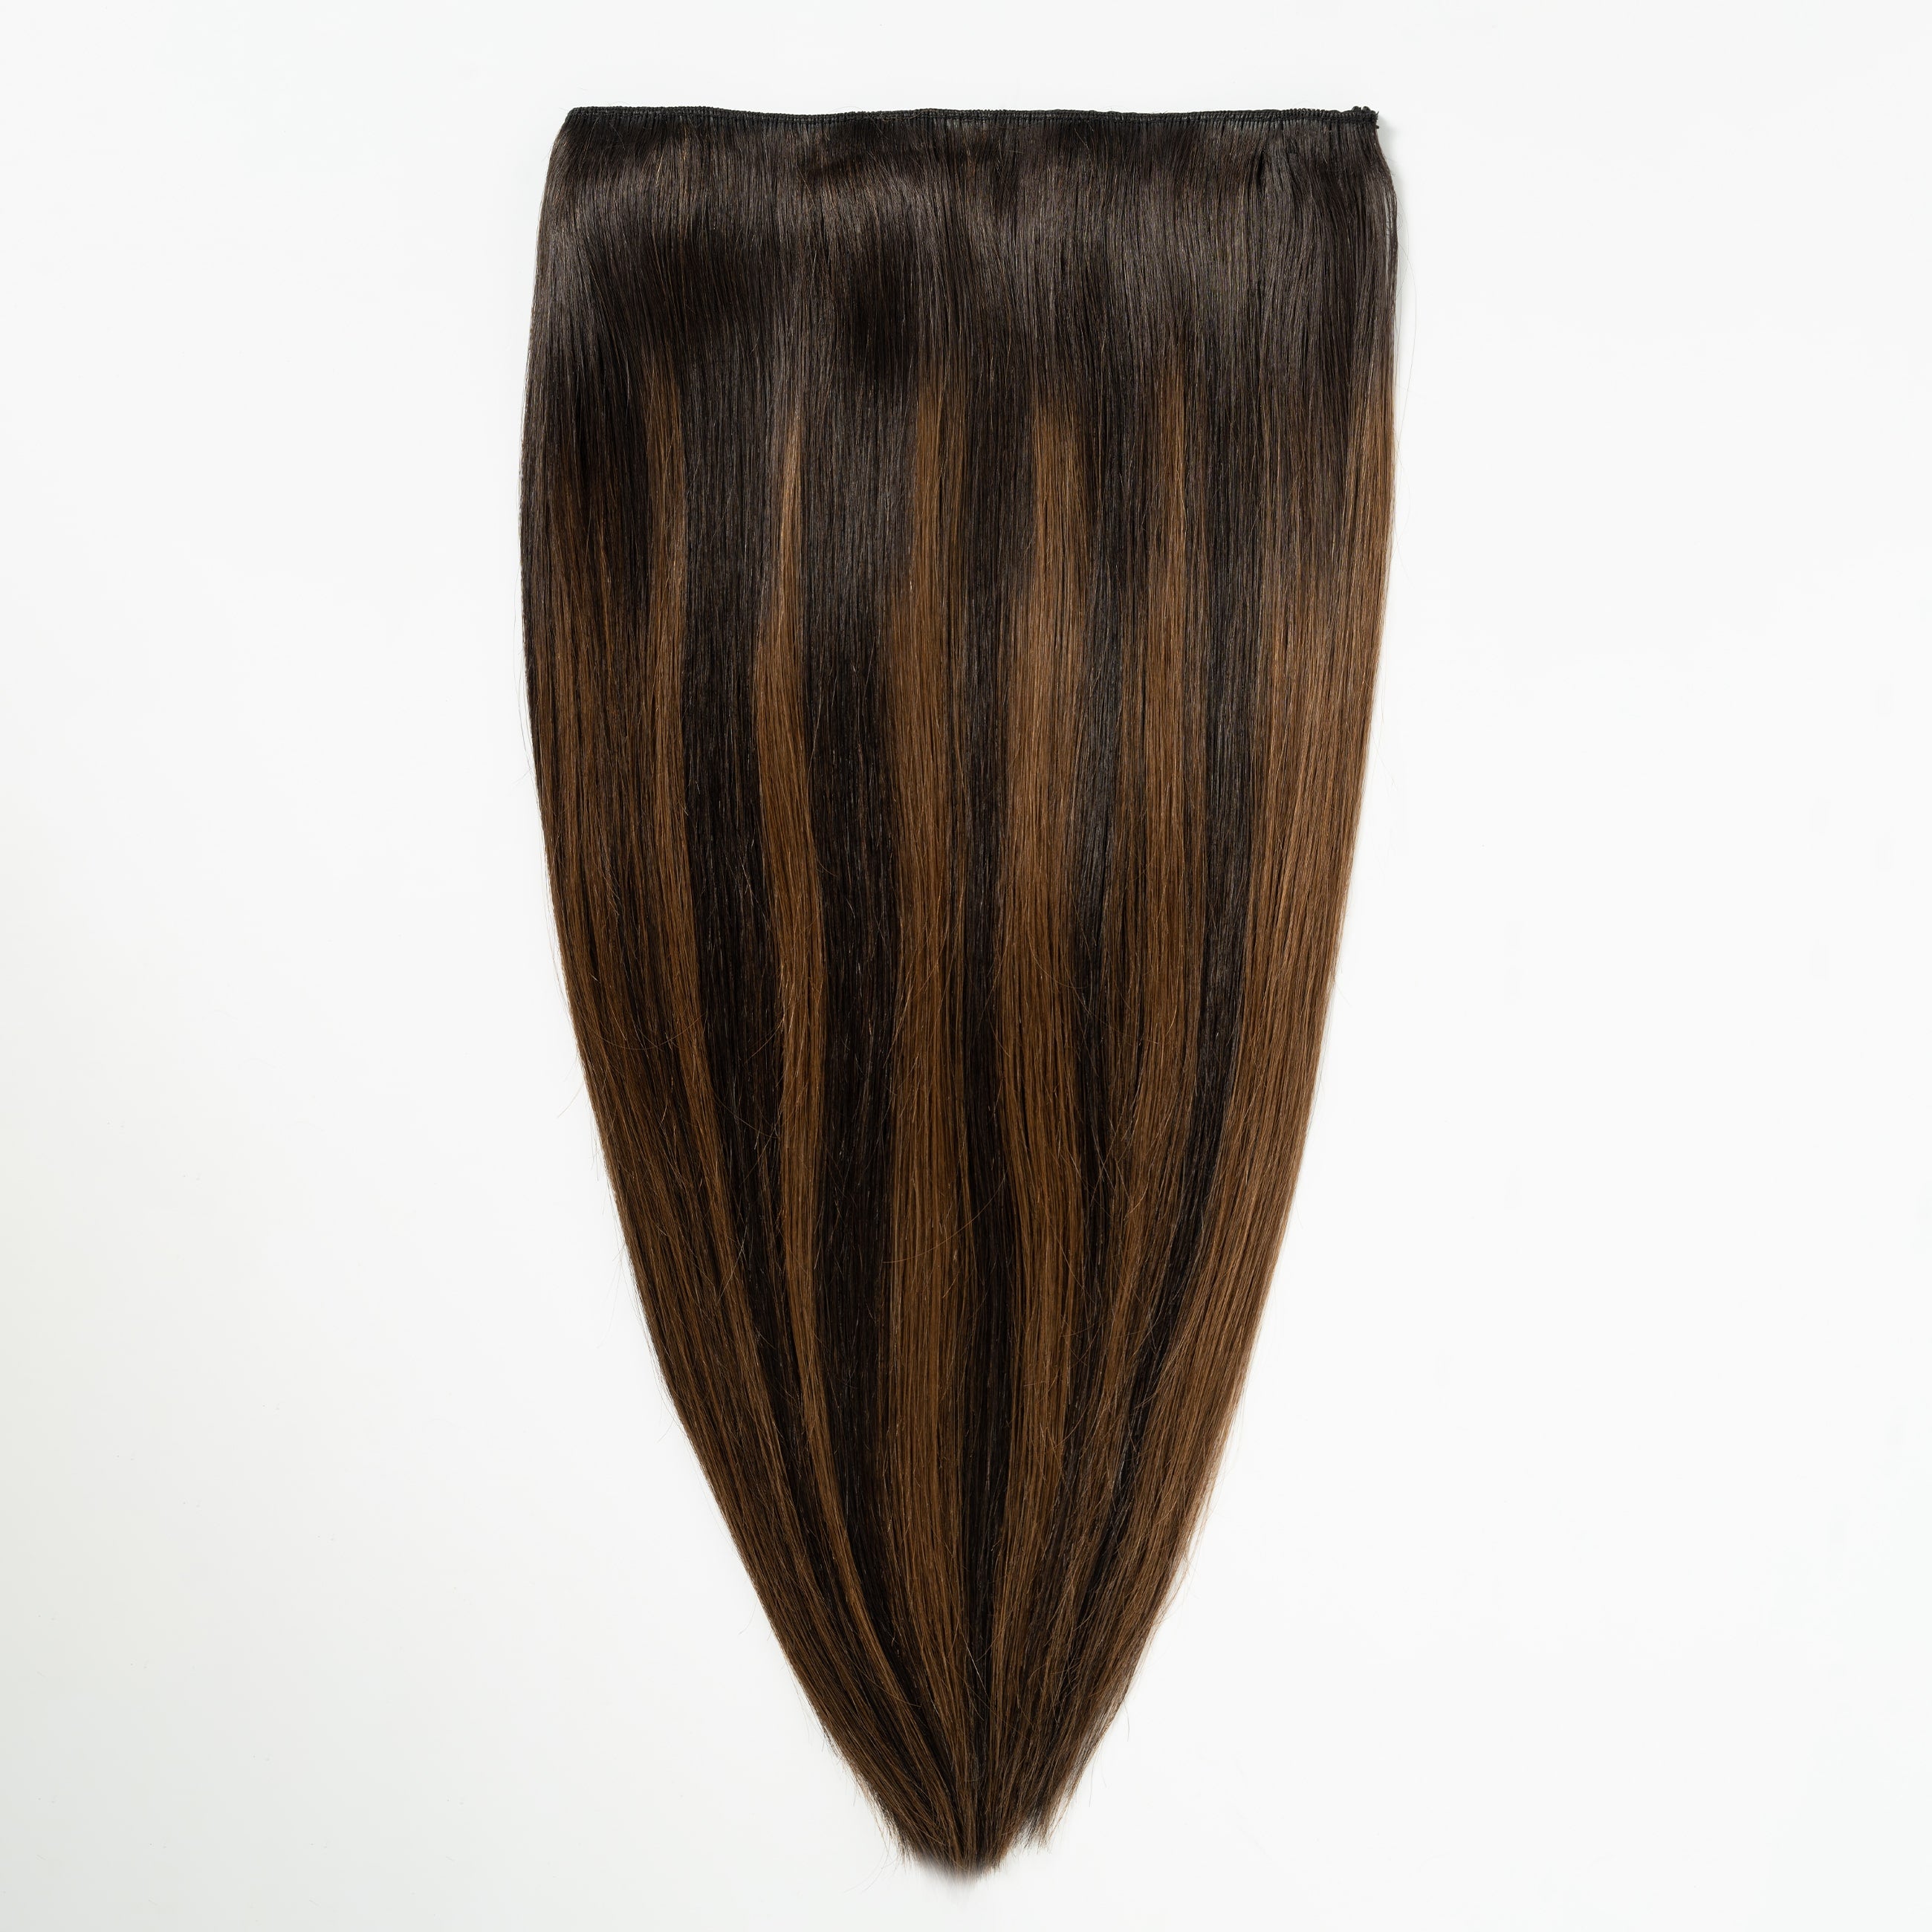 Halo hair extensions - Dark Chocolate Brown Balayage 1A+4